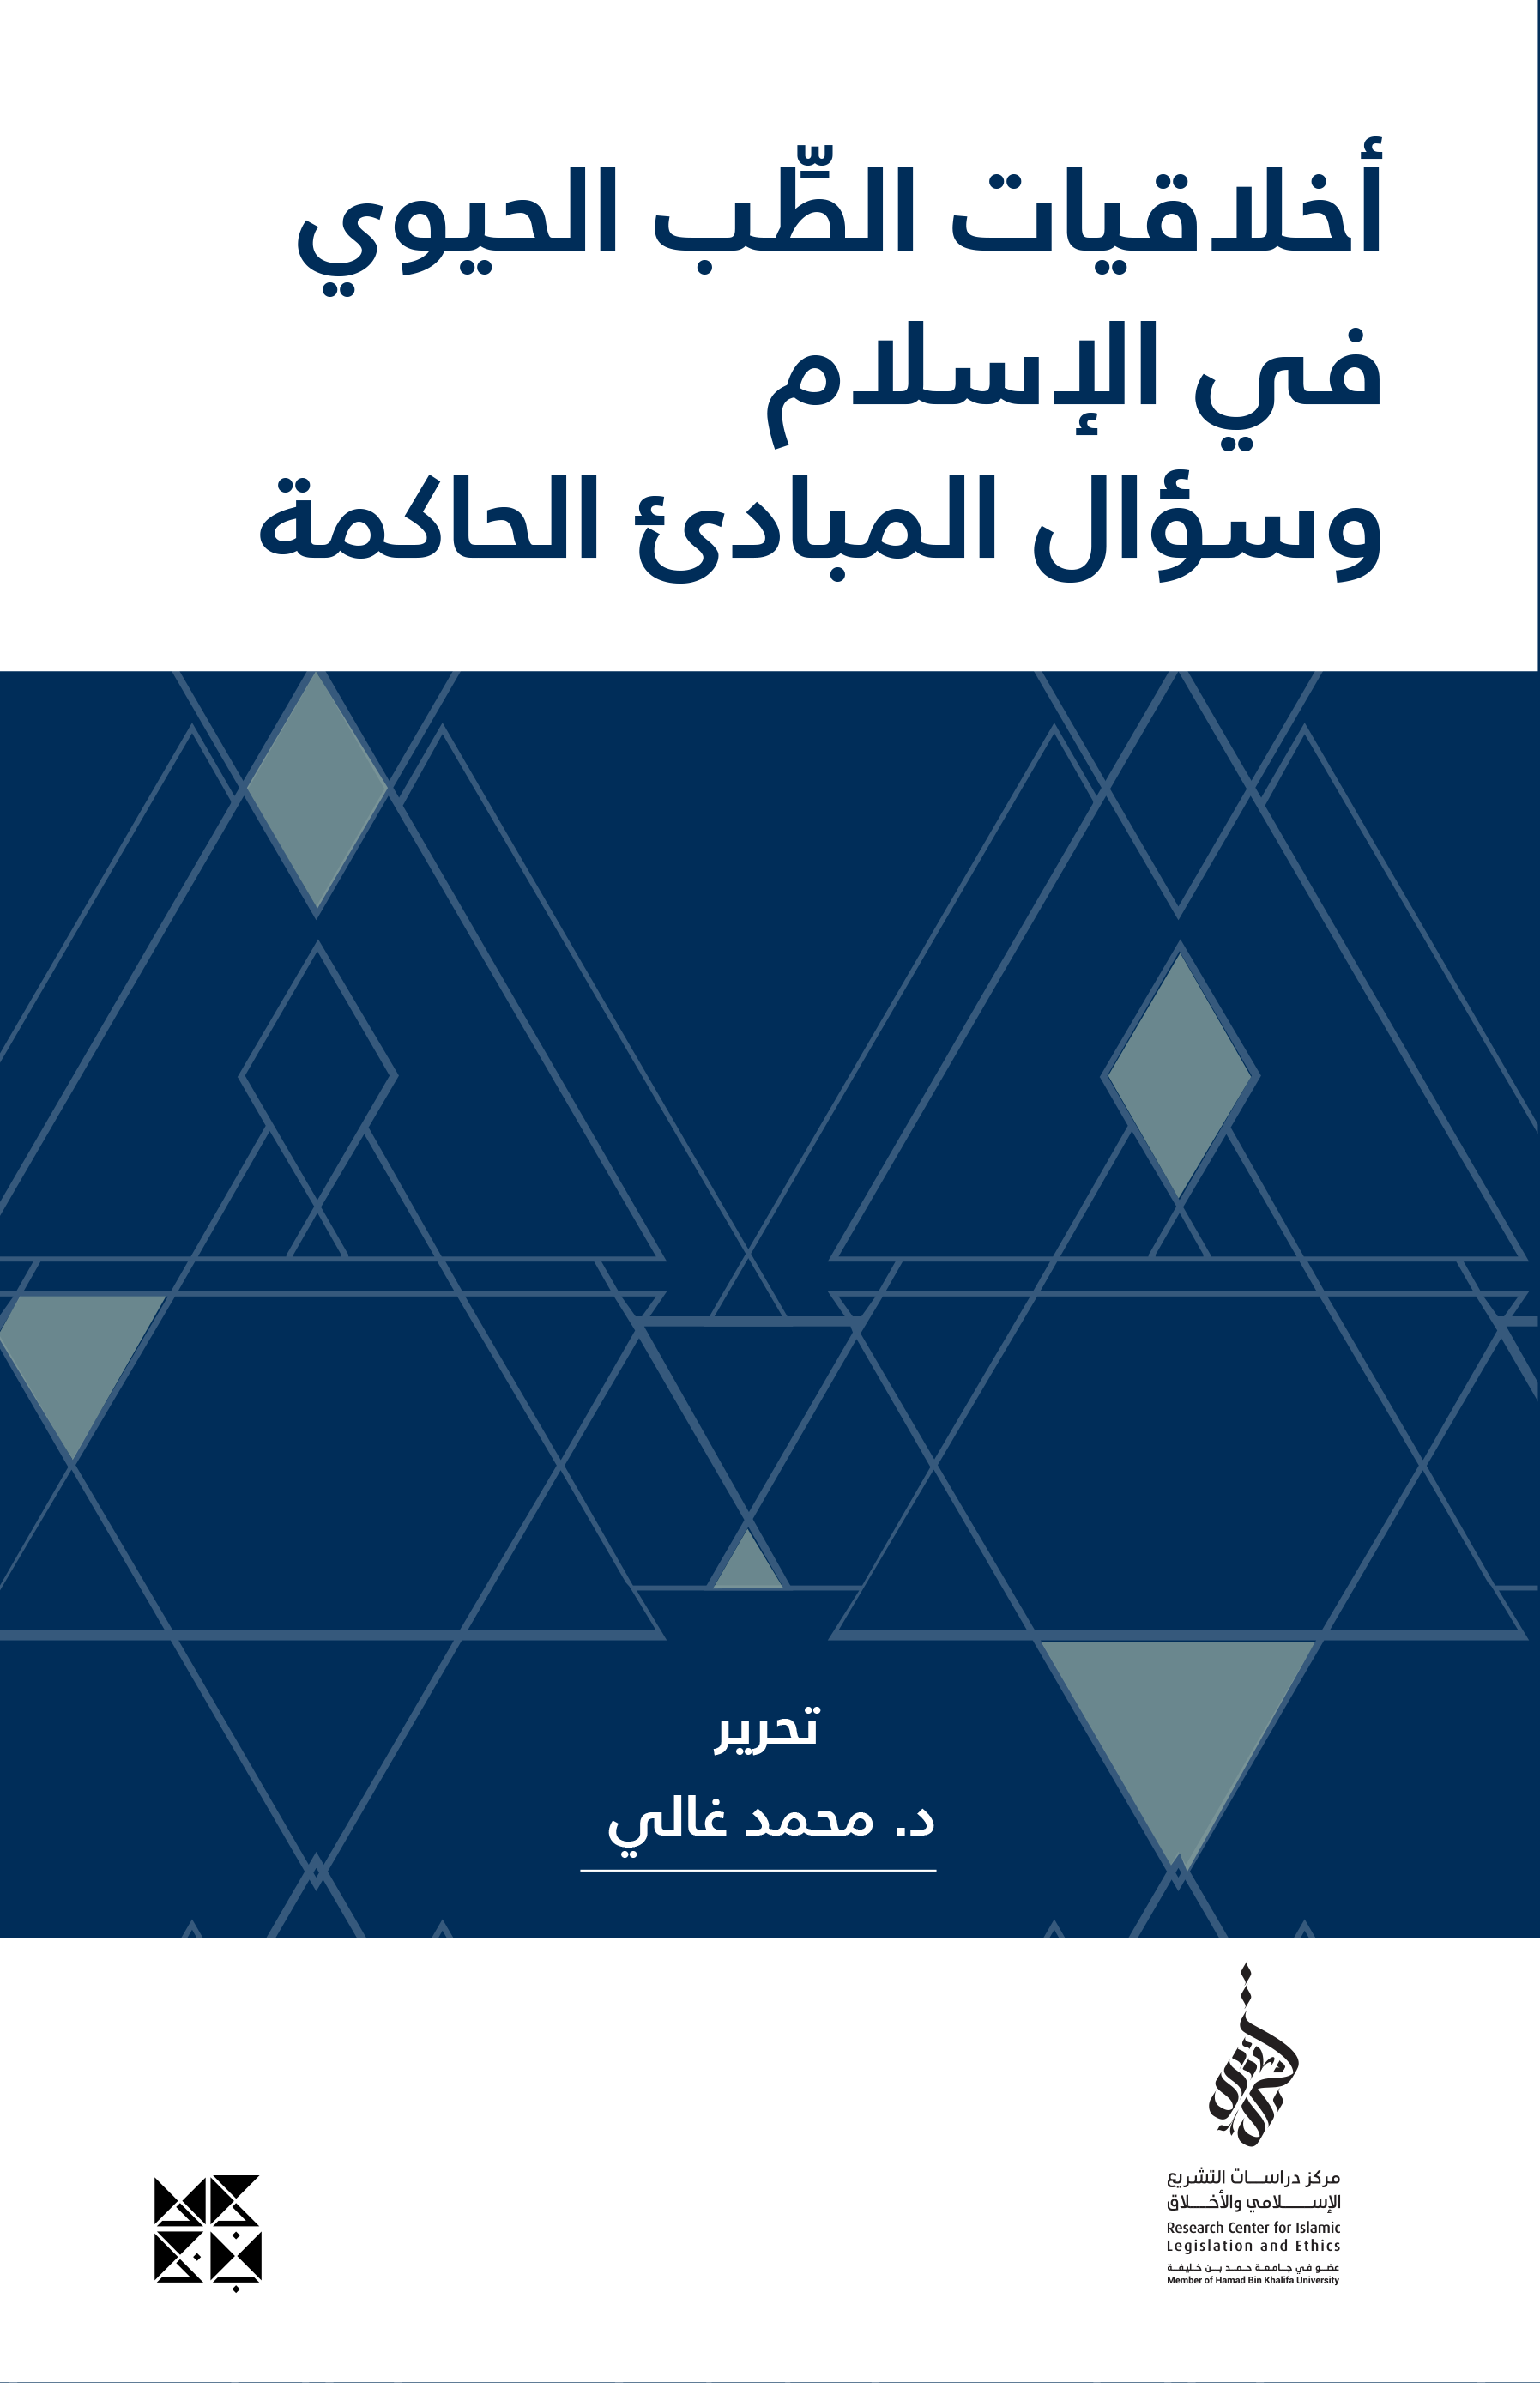 image of ملحق 3: القسم الطبي ودساتير- مواثيق- المهن الطبية